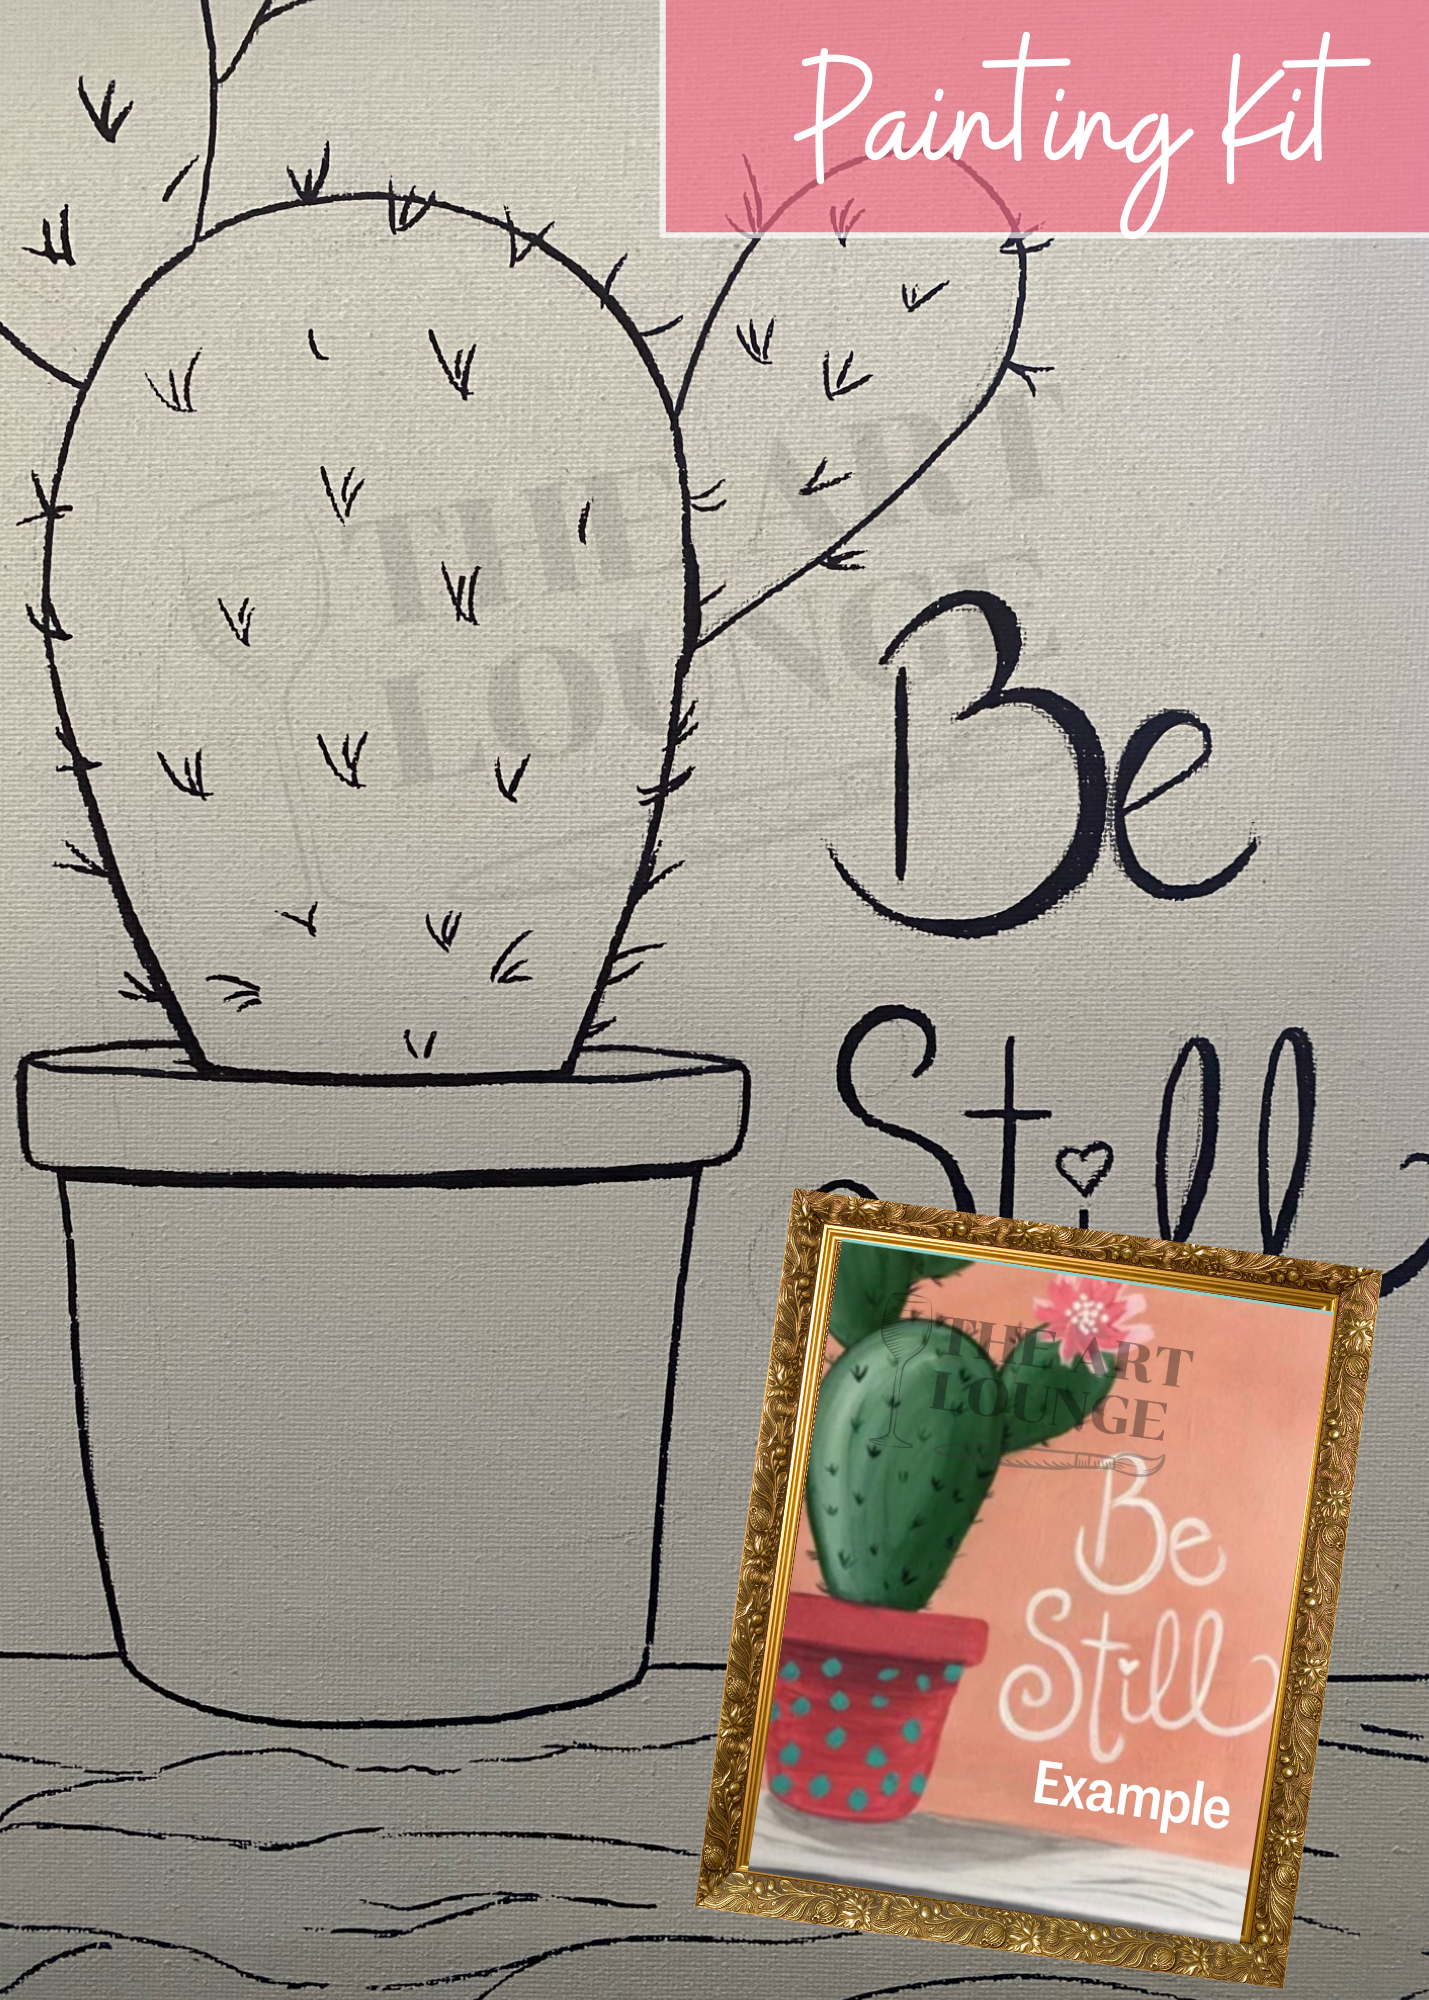 Blooming Cactus Paint Party Kits — Artsy Tessy